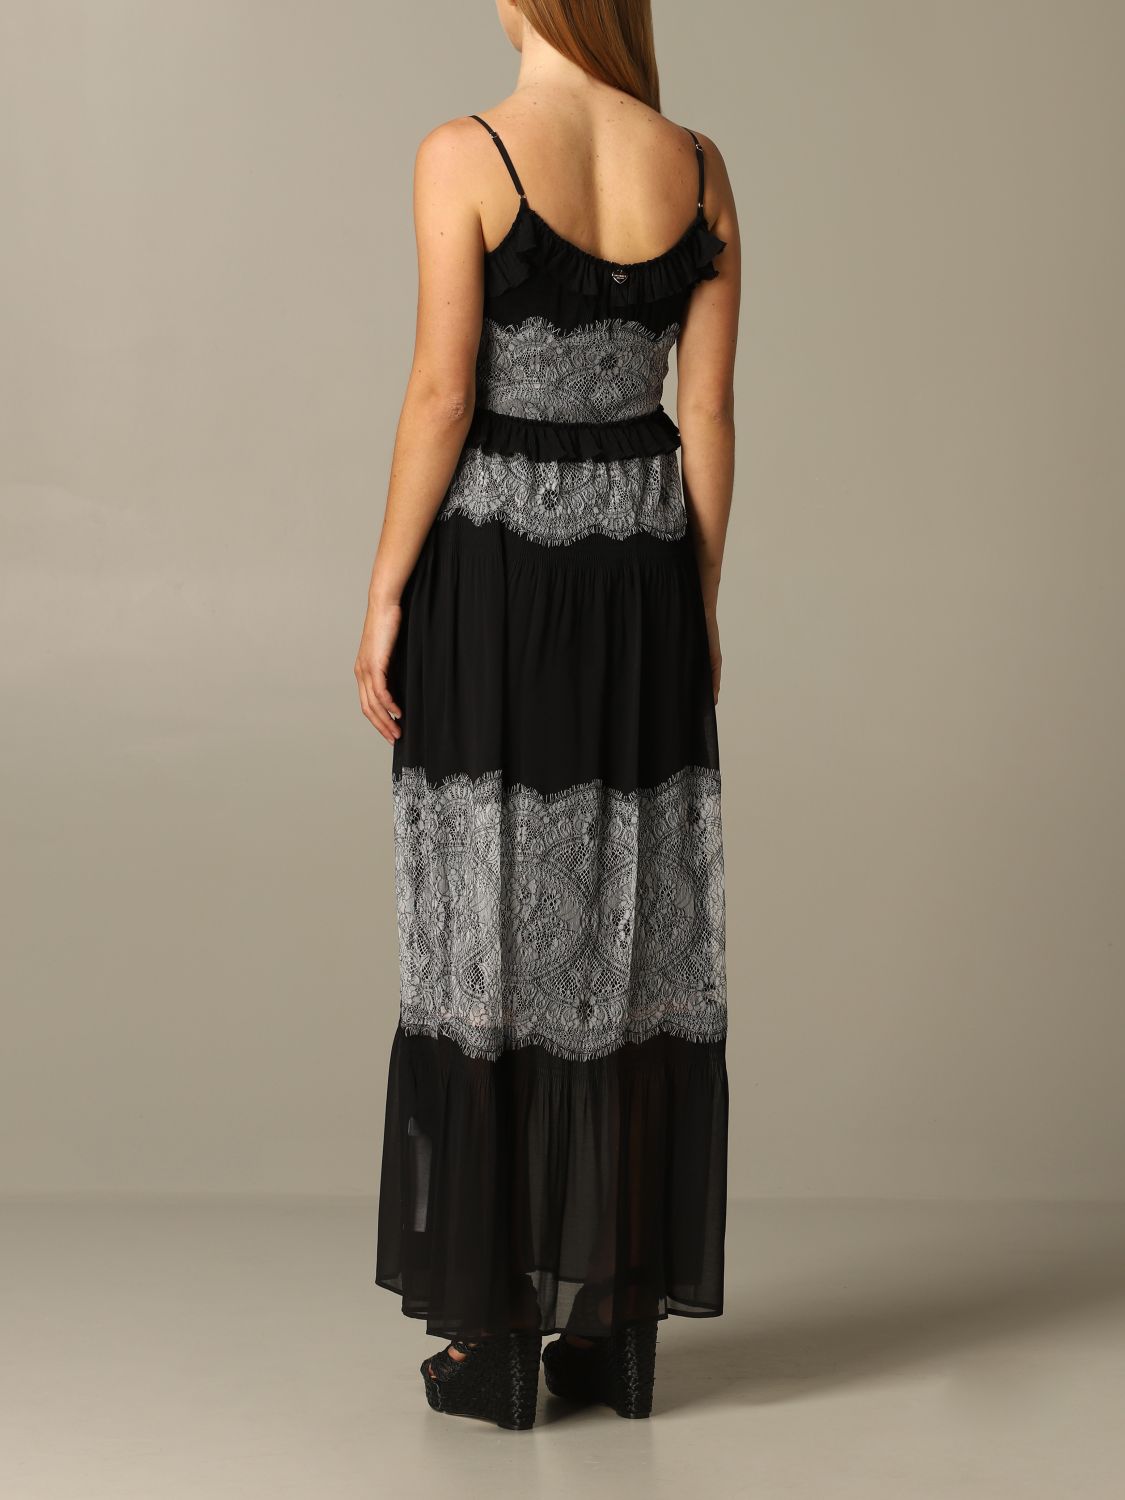 Twin Set Outlet: Twin-set lace dress with ruffles | Dress Twin Set